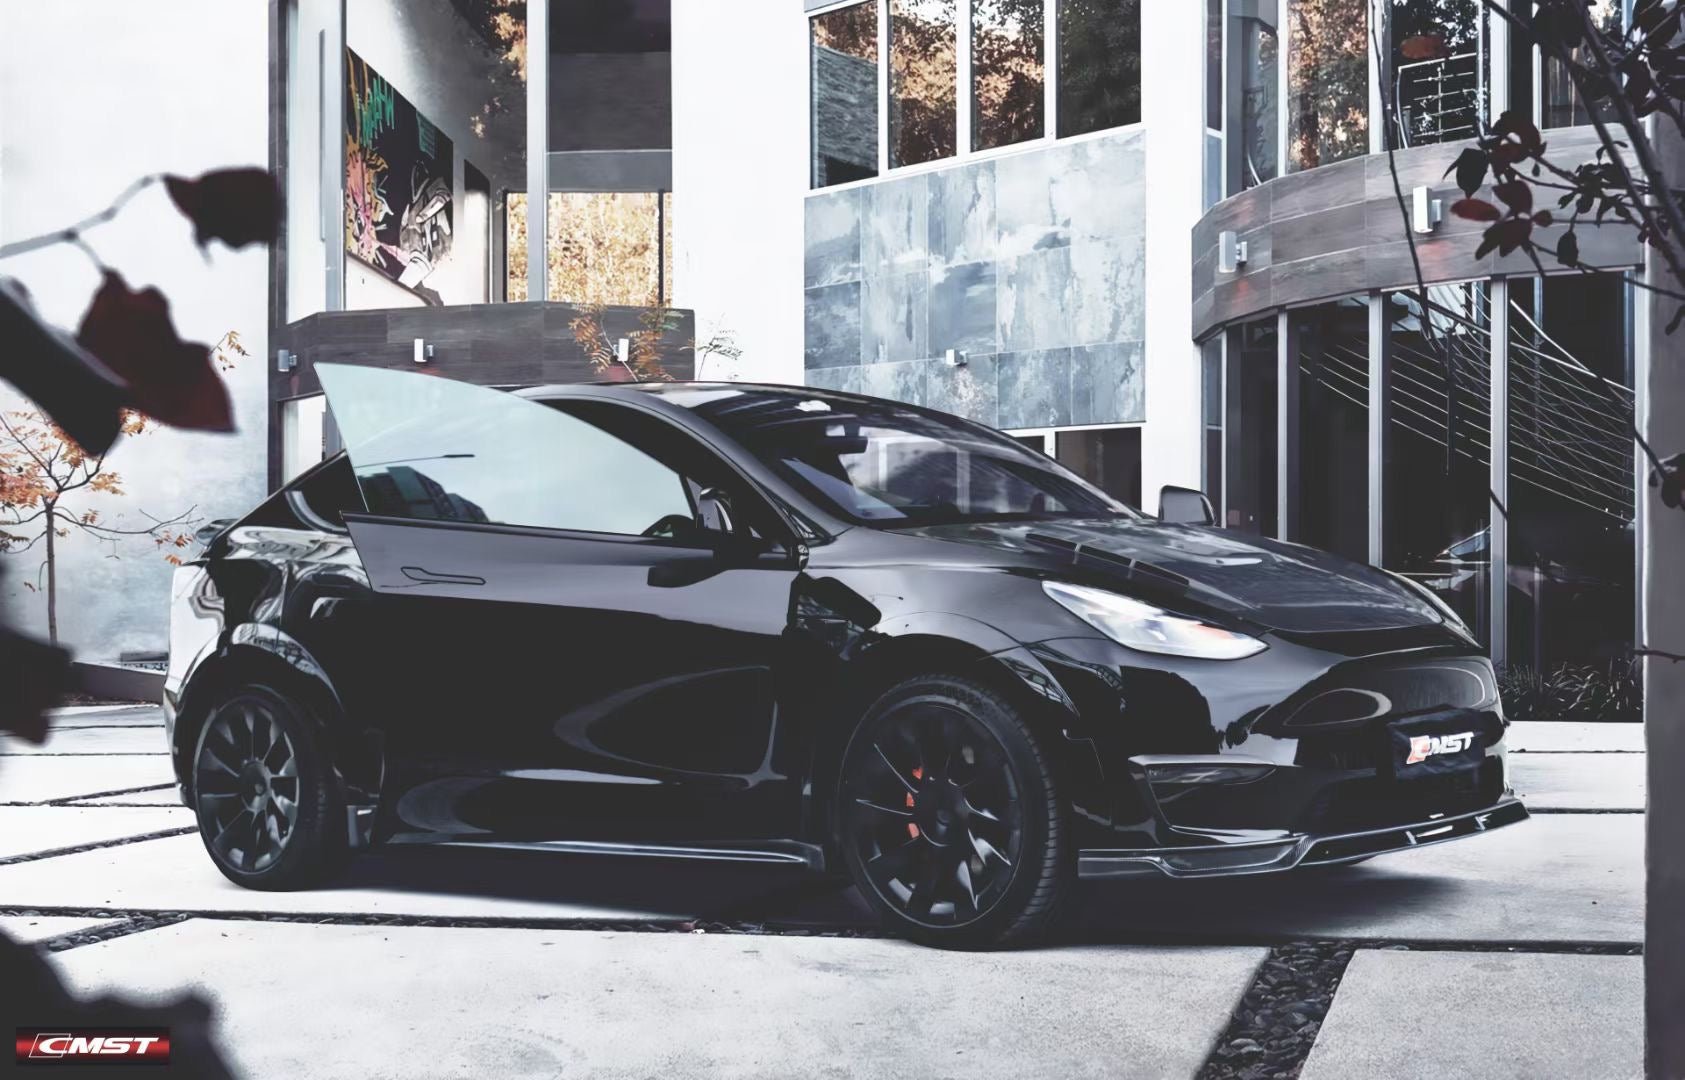 TESERY×CMST Carbon Fiber Package Style B for Tesla Model Y - Tesery Official Store